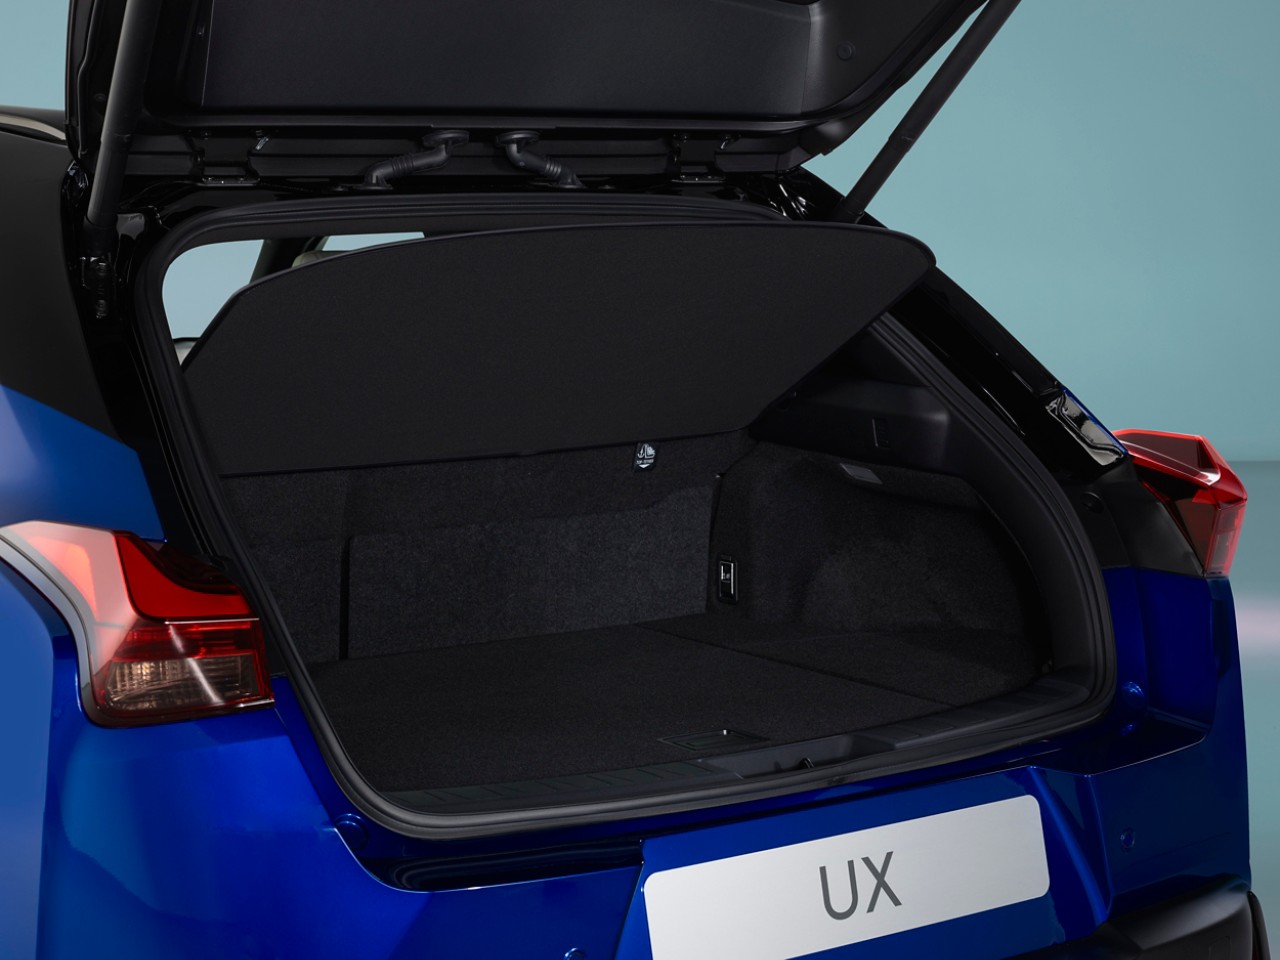 The Lexus UX boot